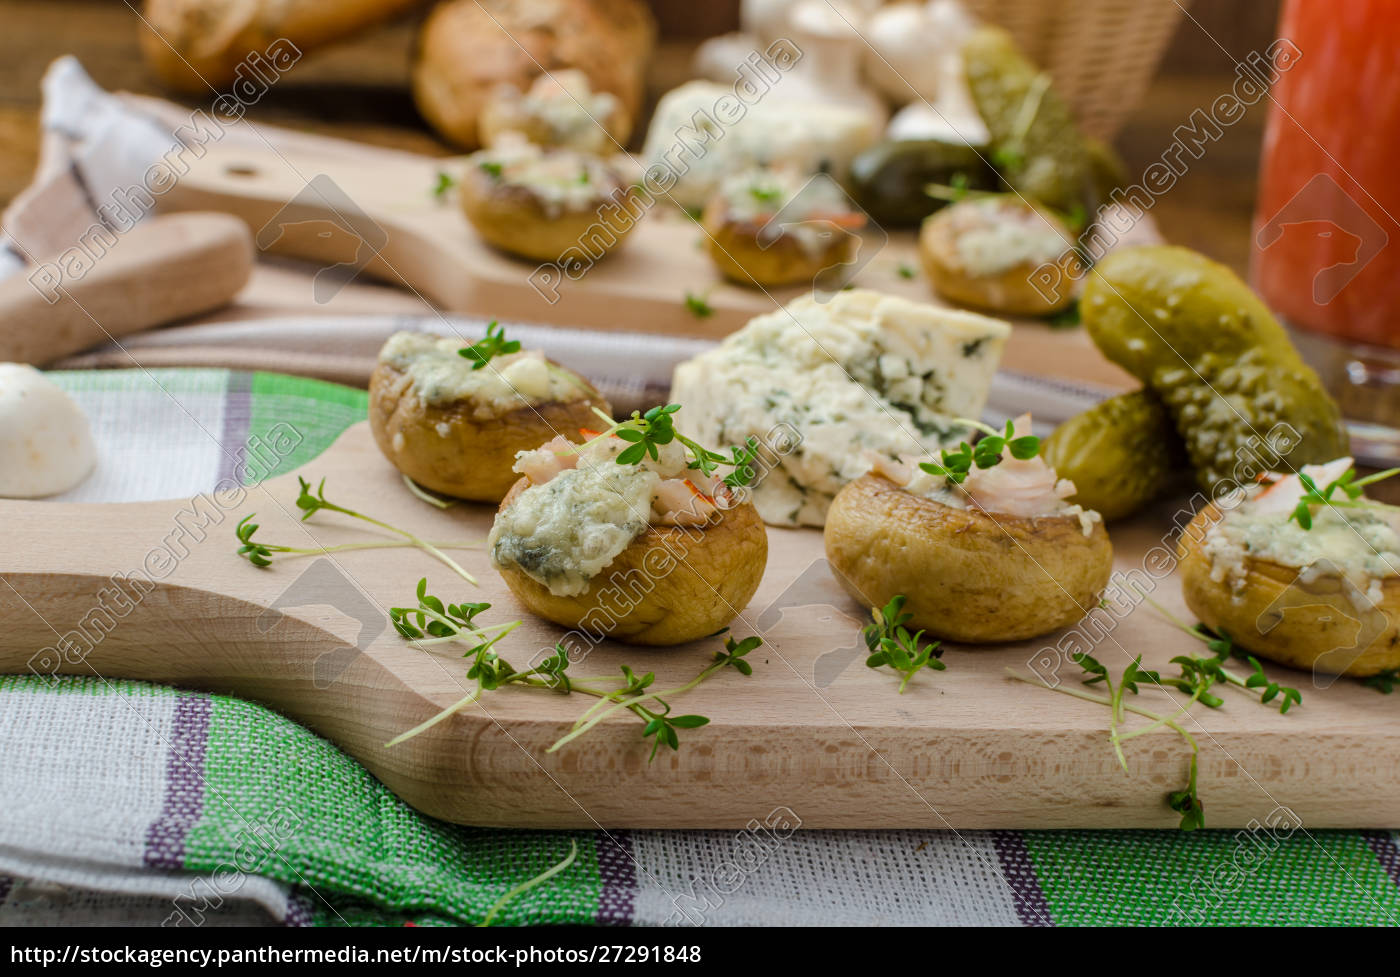 Pilze gefüllt mit Käse - Lizenzfreies Foto - #27291848 | Bildagentur ...